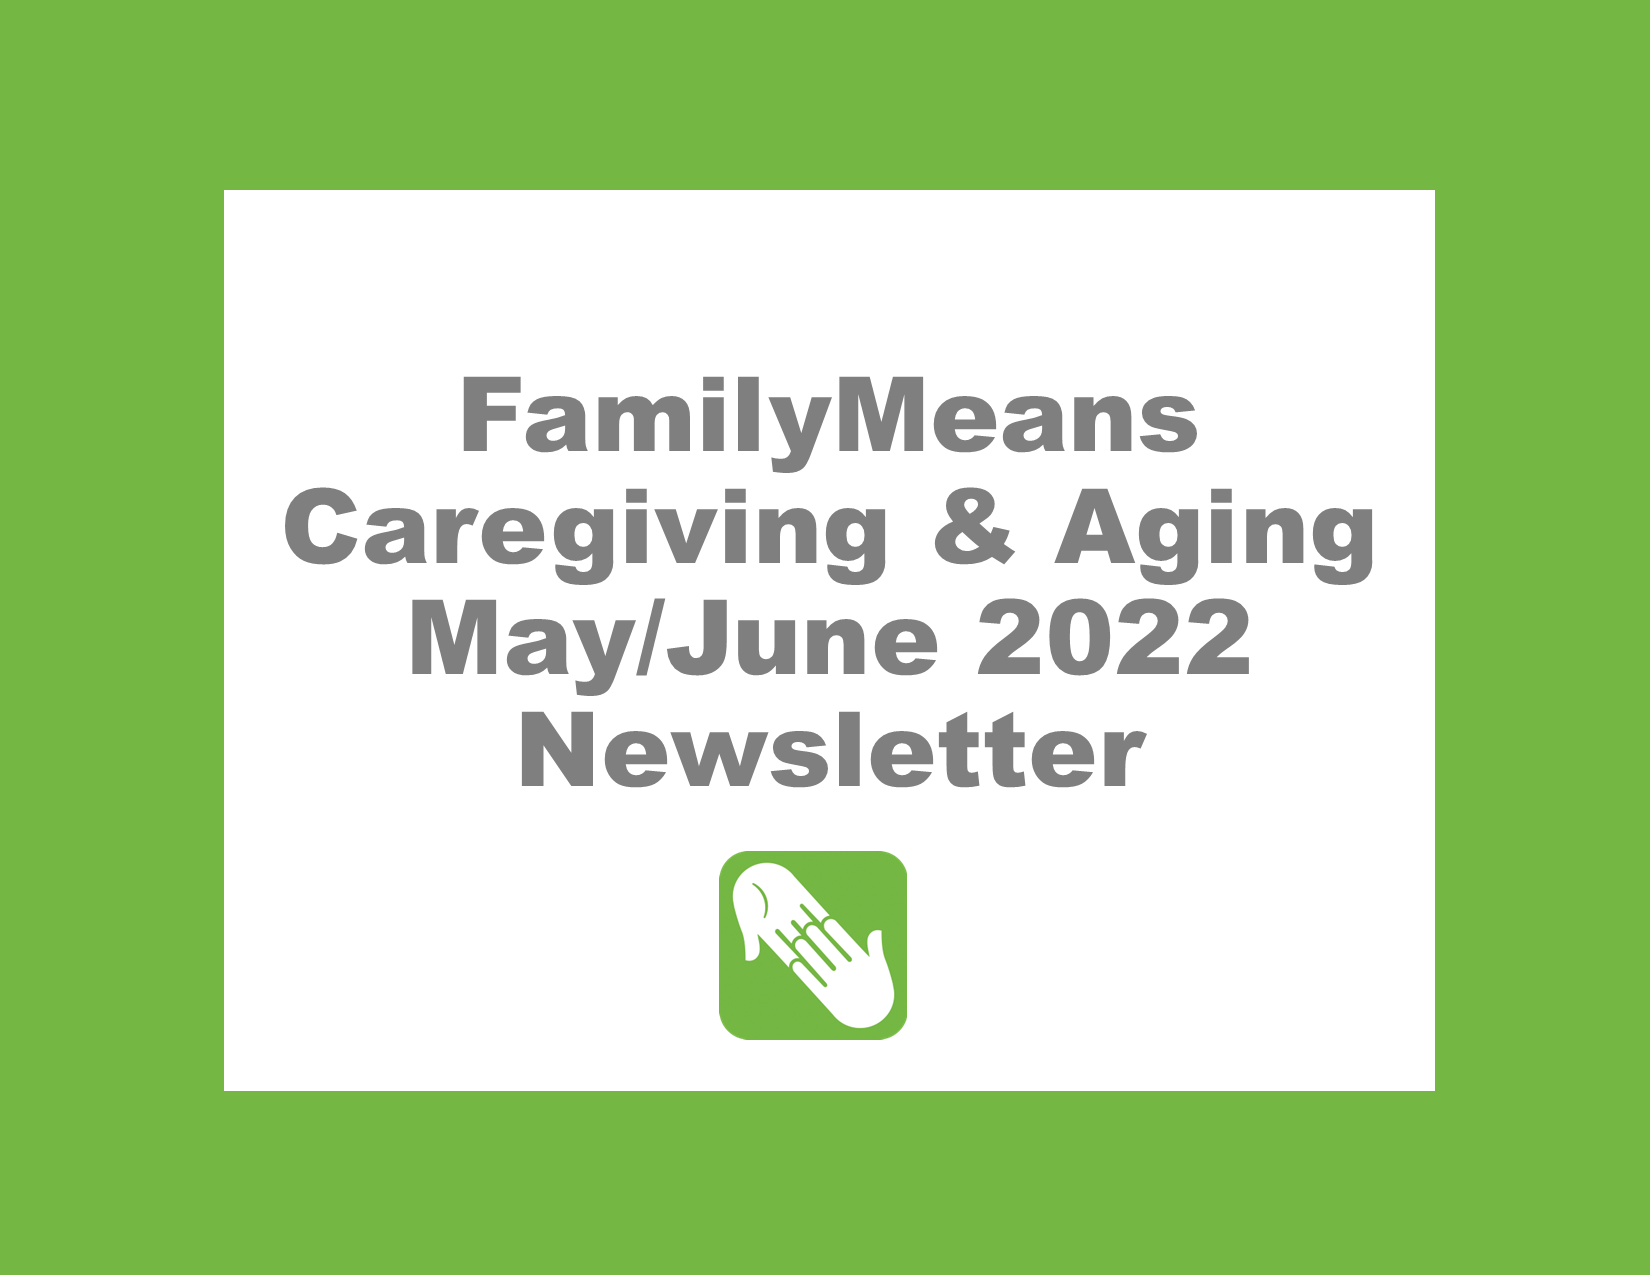 Caregiving & Aging May/June 2022 Newsletter